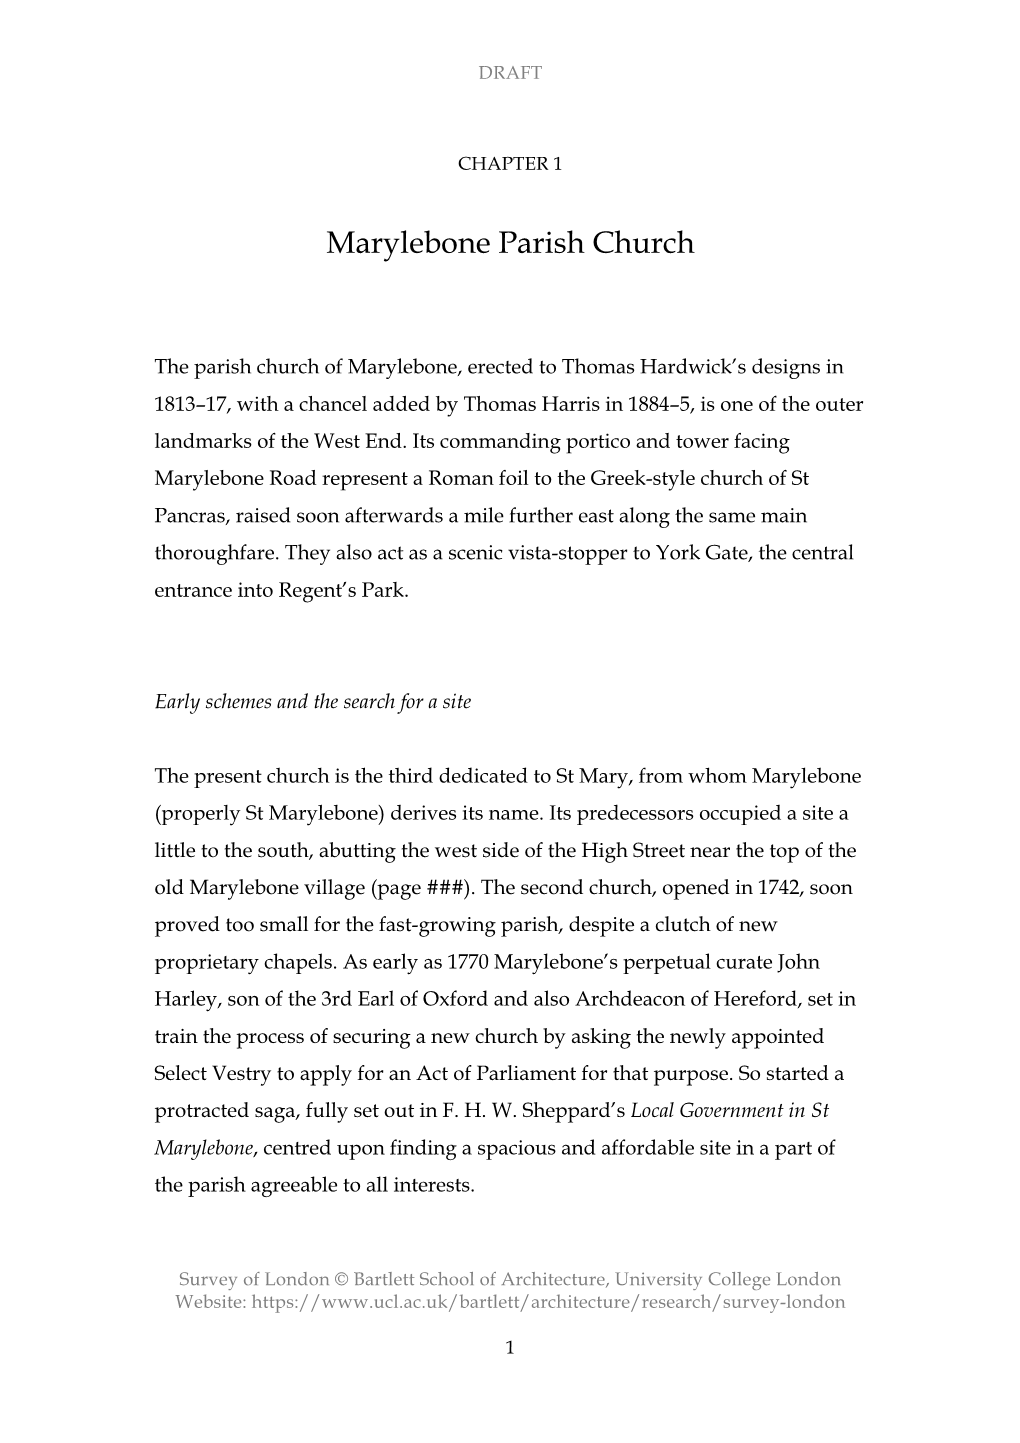 Chapter 1: Marylebone Parish Church